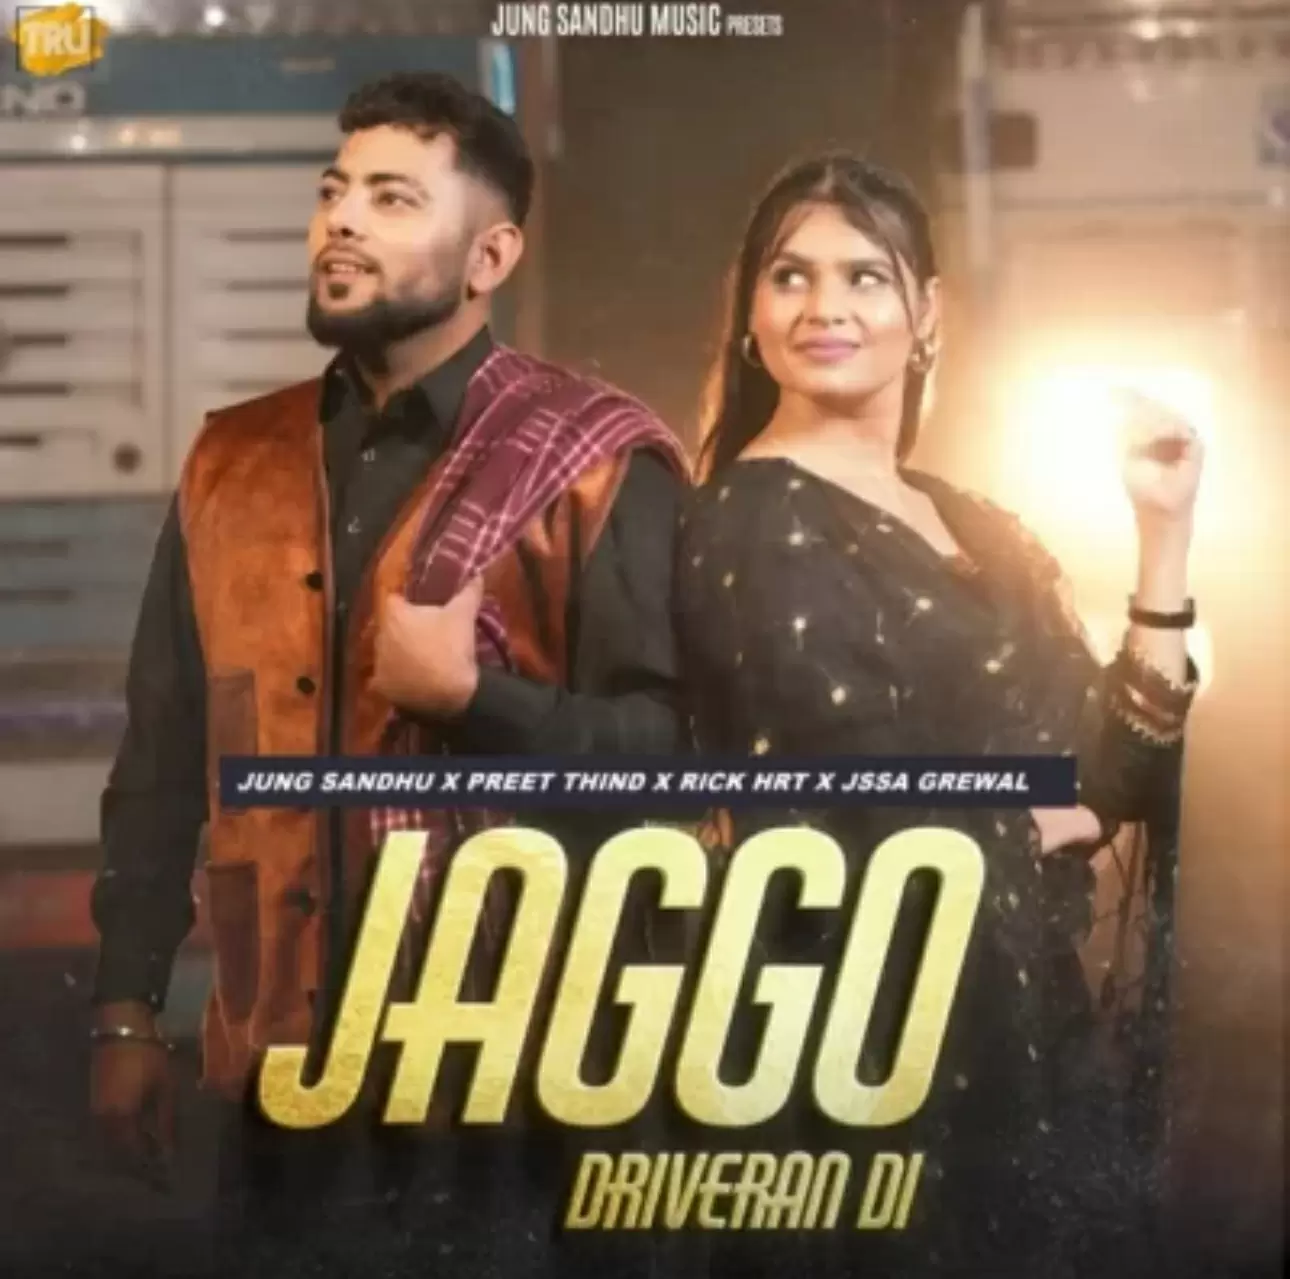 Jaggo Driveran Di - Single Song by Jung Sandhu - Mr-Punjab